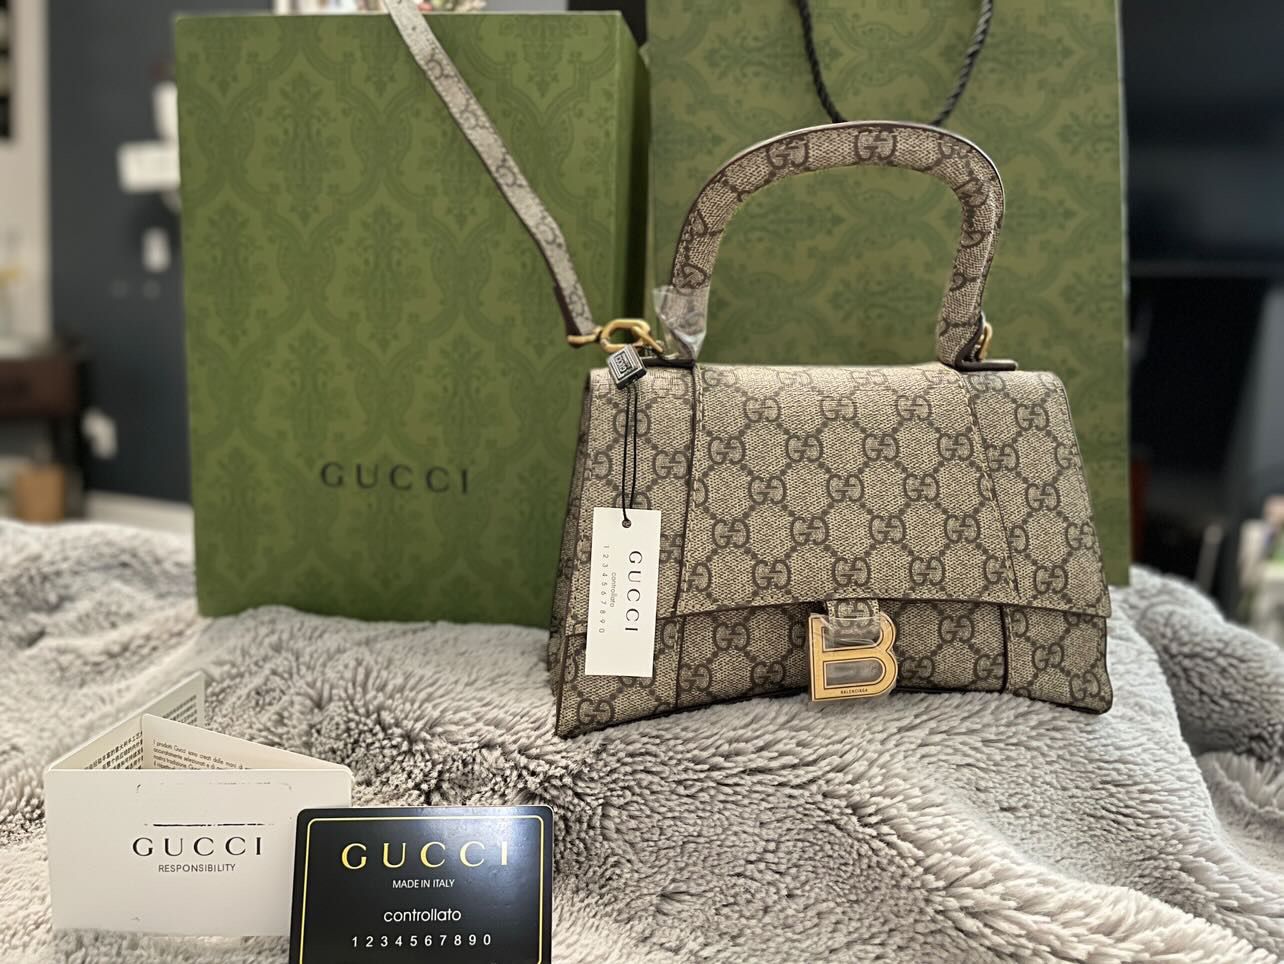 Gucci Balenciaga Hourglass Bag for Sale in Concord, NC - OfferUp